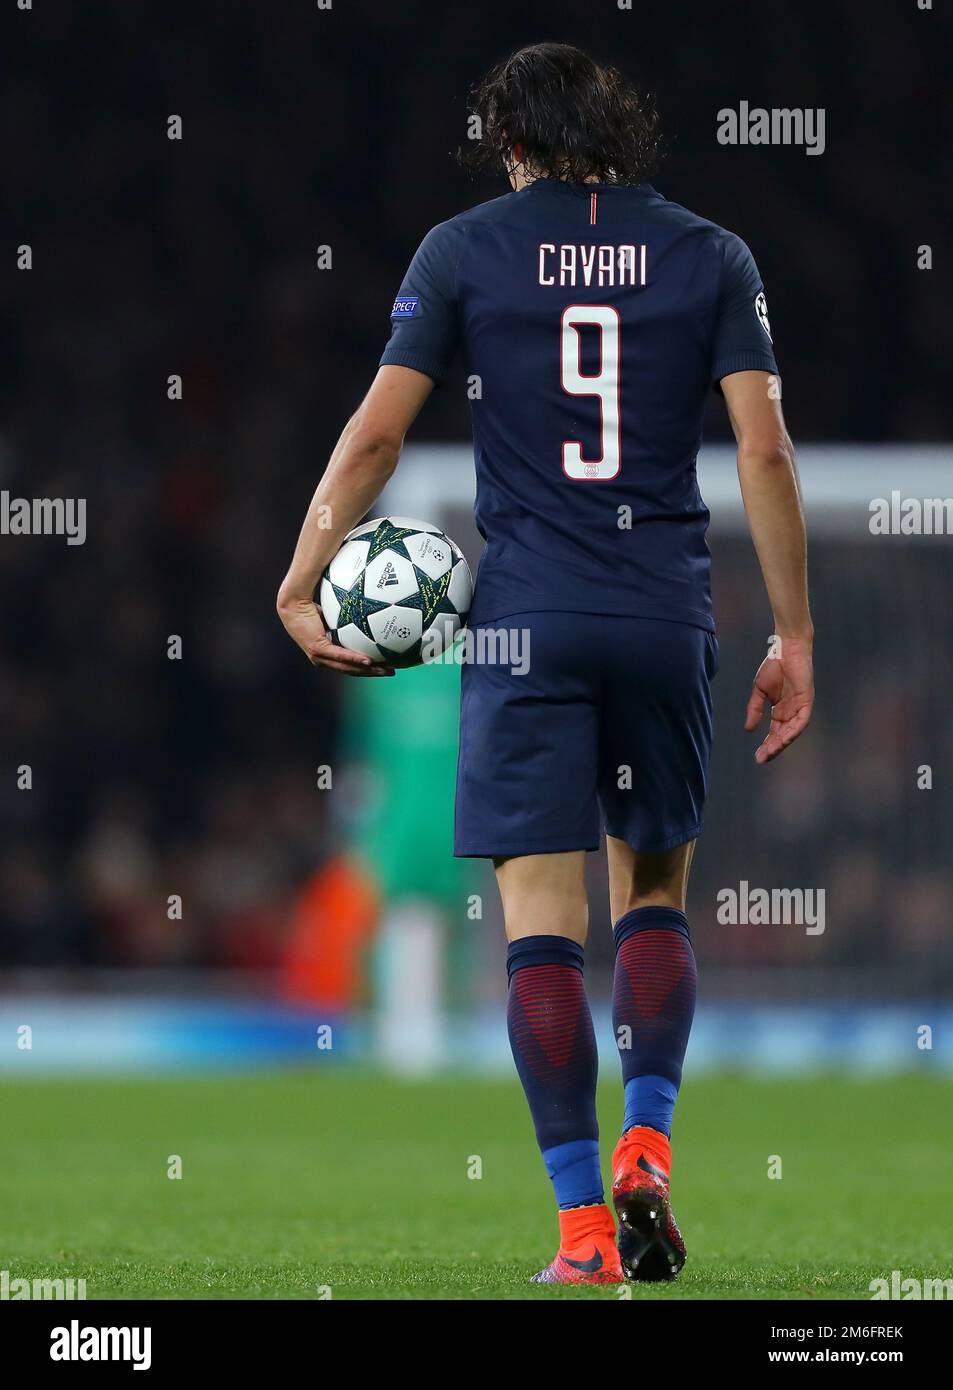 Edinson Cavani of Paris Saint-Germain - Arsenal v Paris Saint-Germain, UEFA Champions League, Emirates Stadium, London - 23rd November 2016. Stock Photo